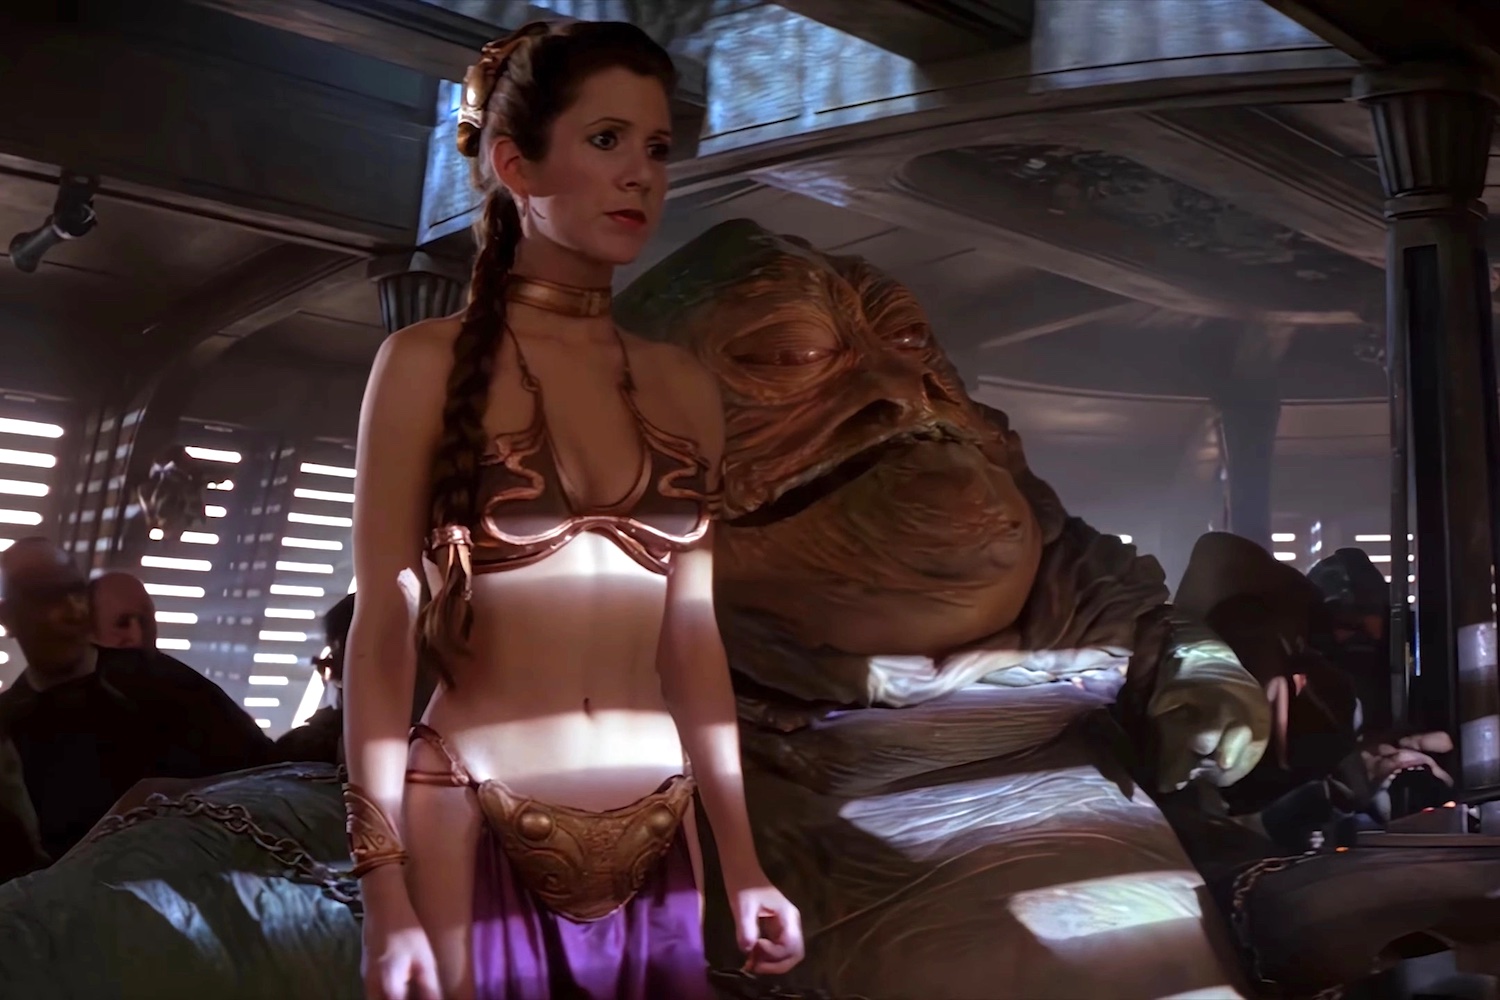 Star Wars Princess Leia Bikini Porn - The Princess Leia Slave Fetish Lives On - InsideHook